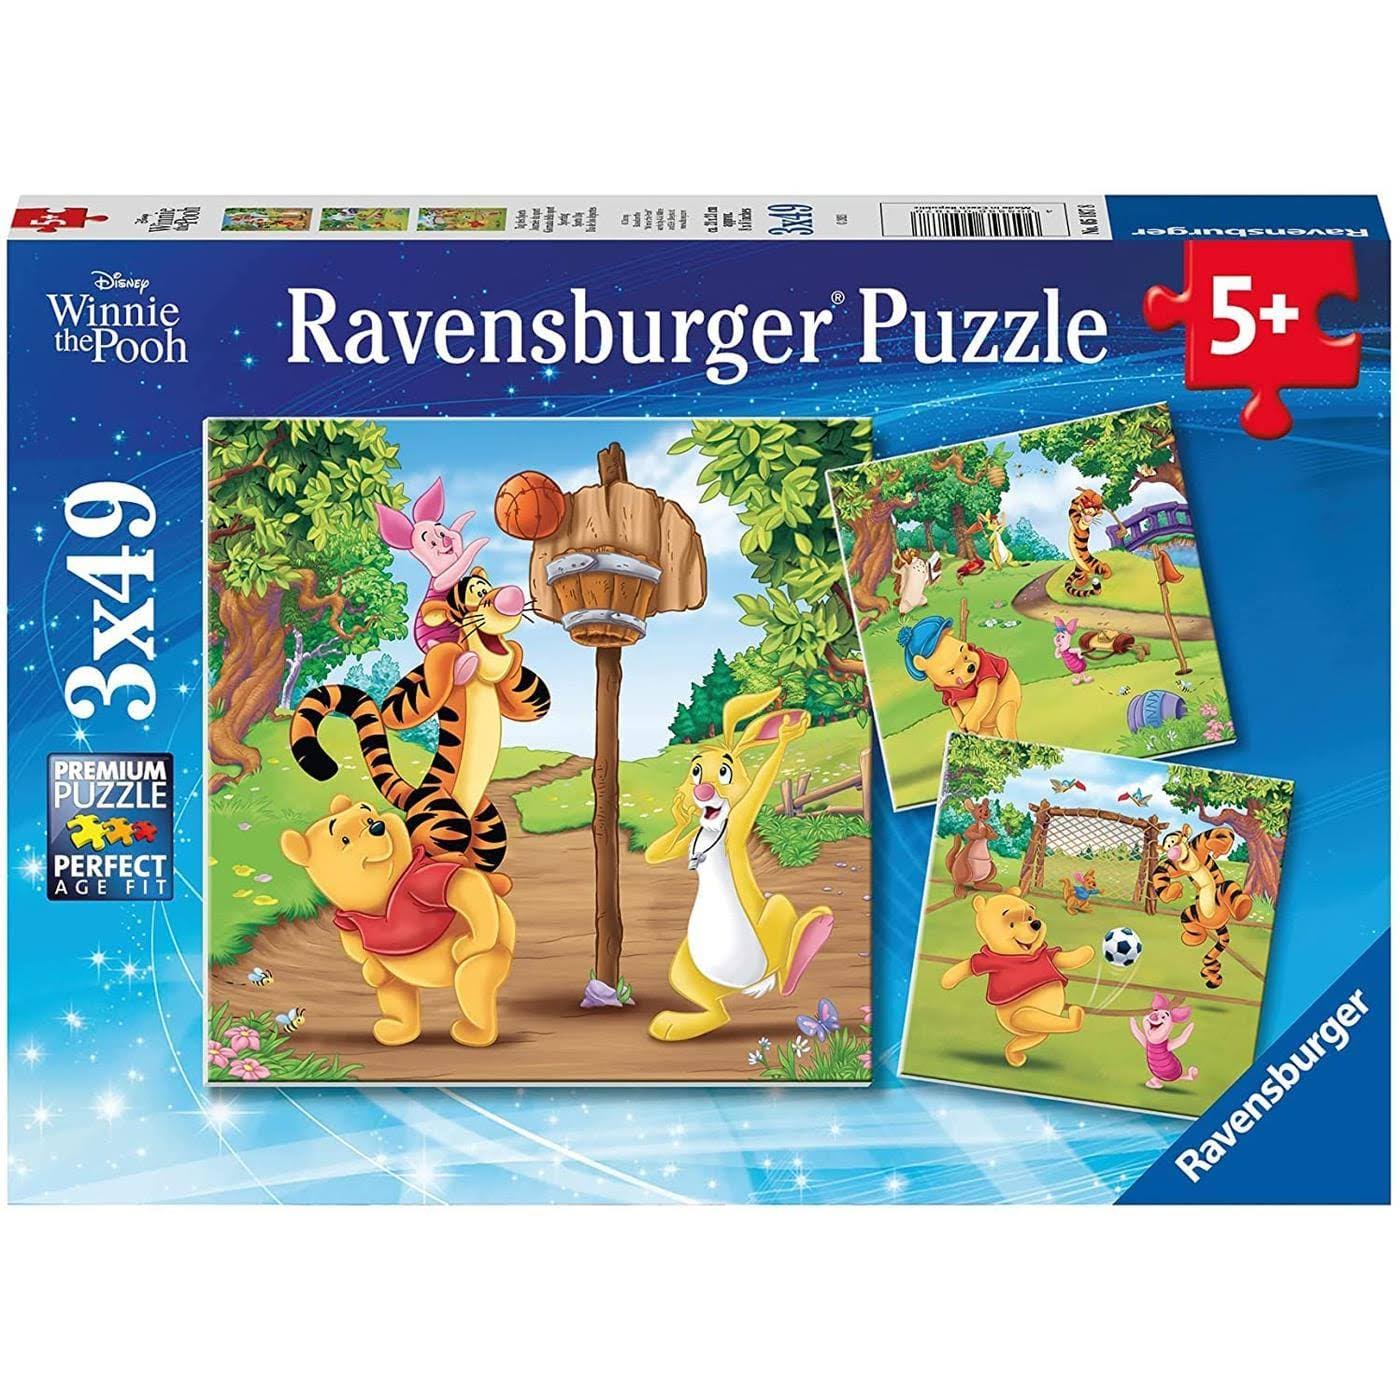 Ravensburger Winnie the Pooh Jigsaw Puzzles 3 x 49pc